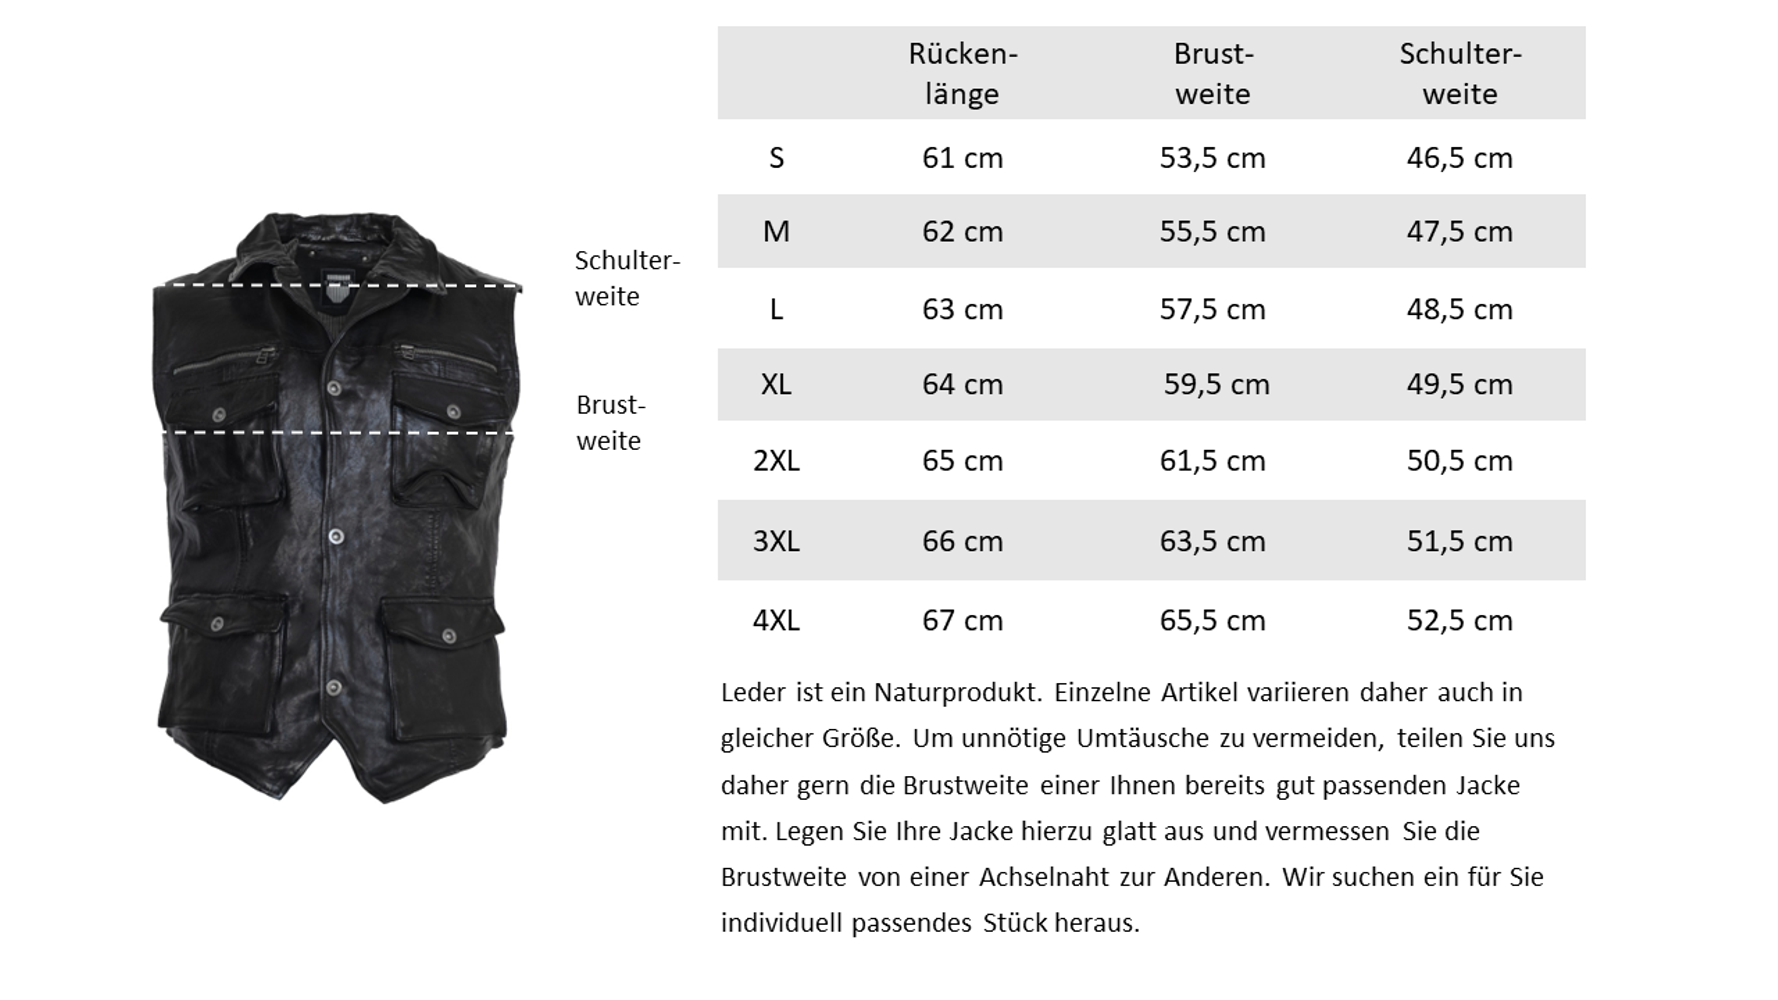 Men's leather vest Vest SK, black in 3 colors, Bild 6